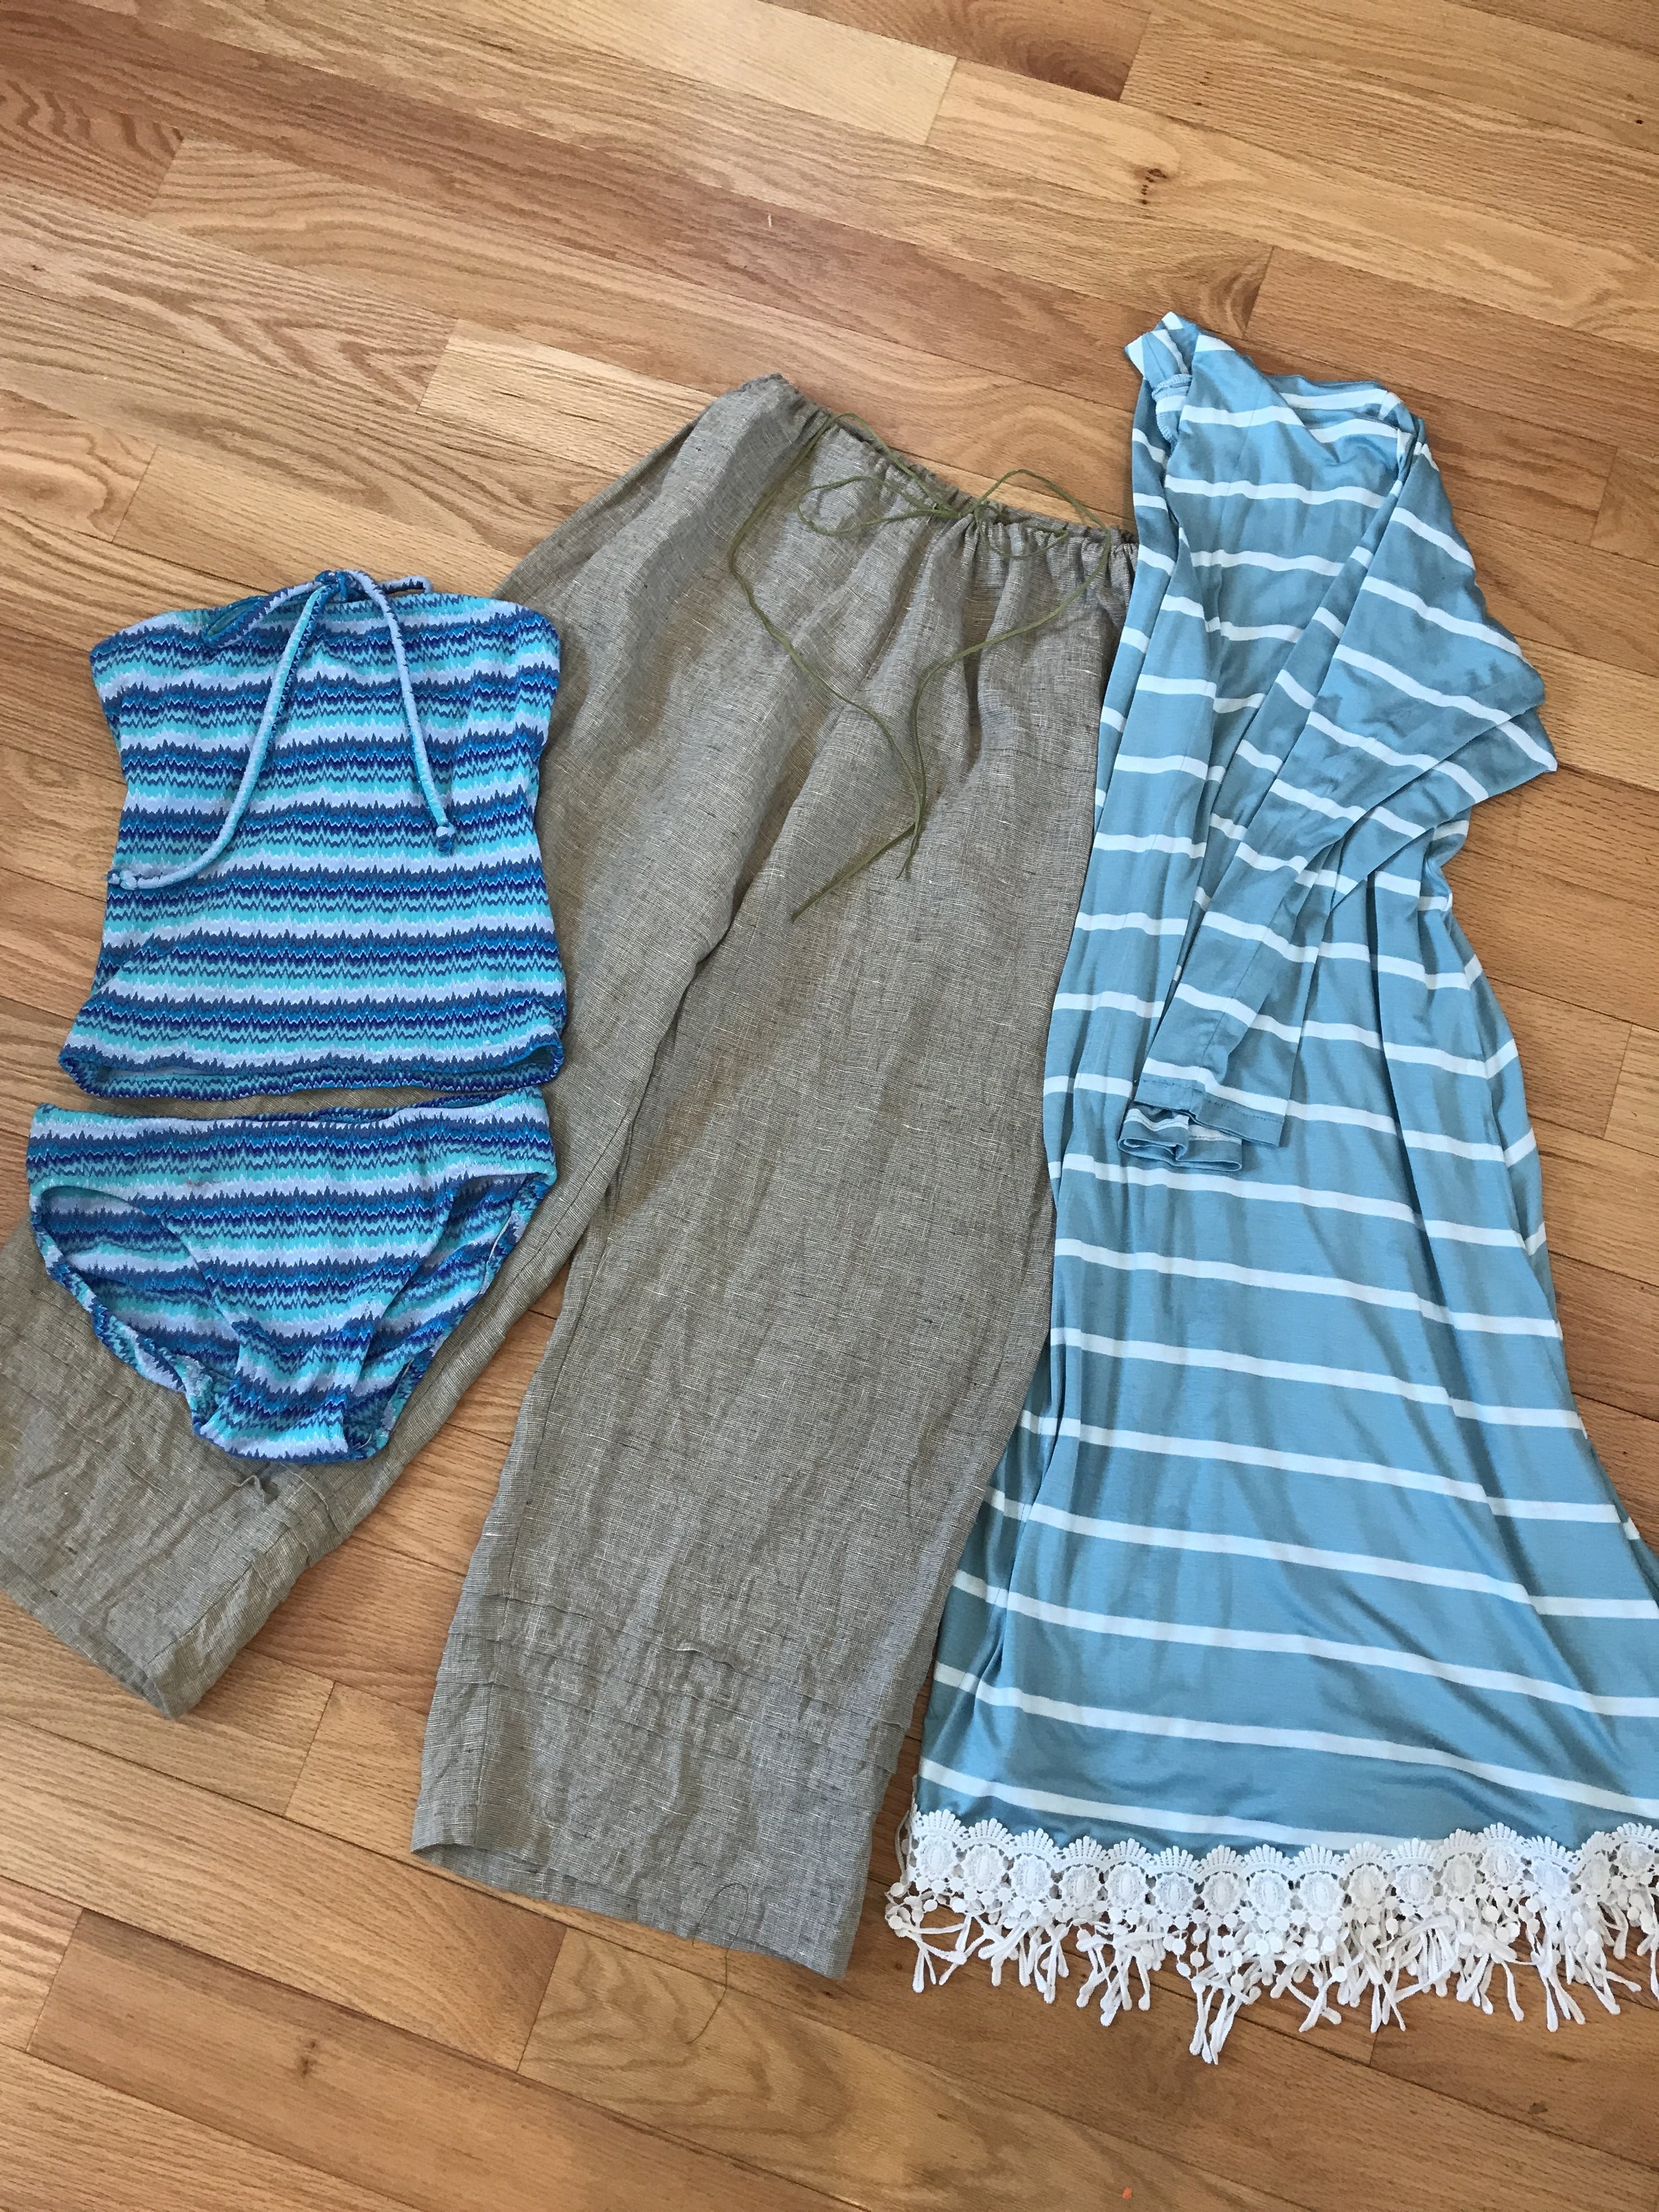 Sewing a Spring Break Capsule Wardrobe with Christine Jonson Patterns | Wide leg linen pants, tankini, long swing cardigan